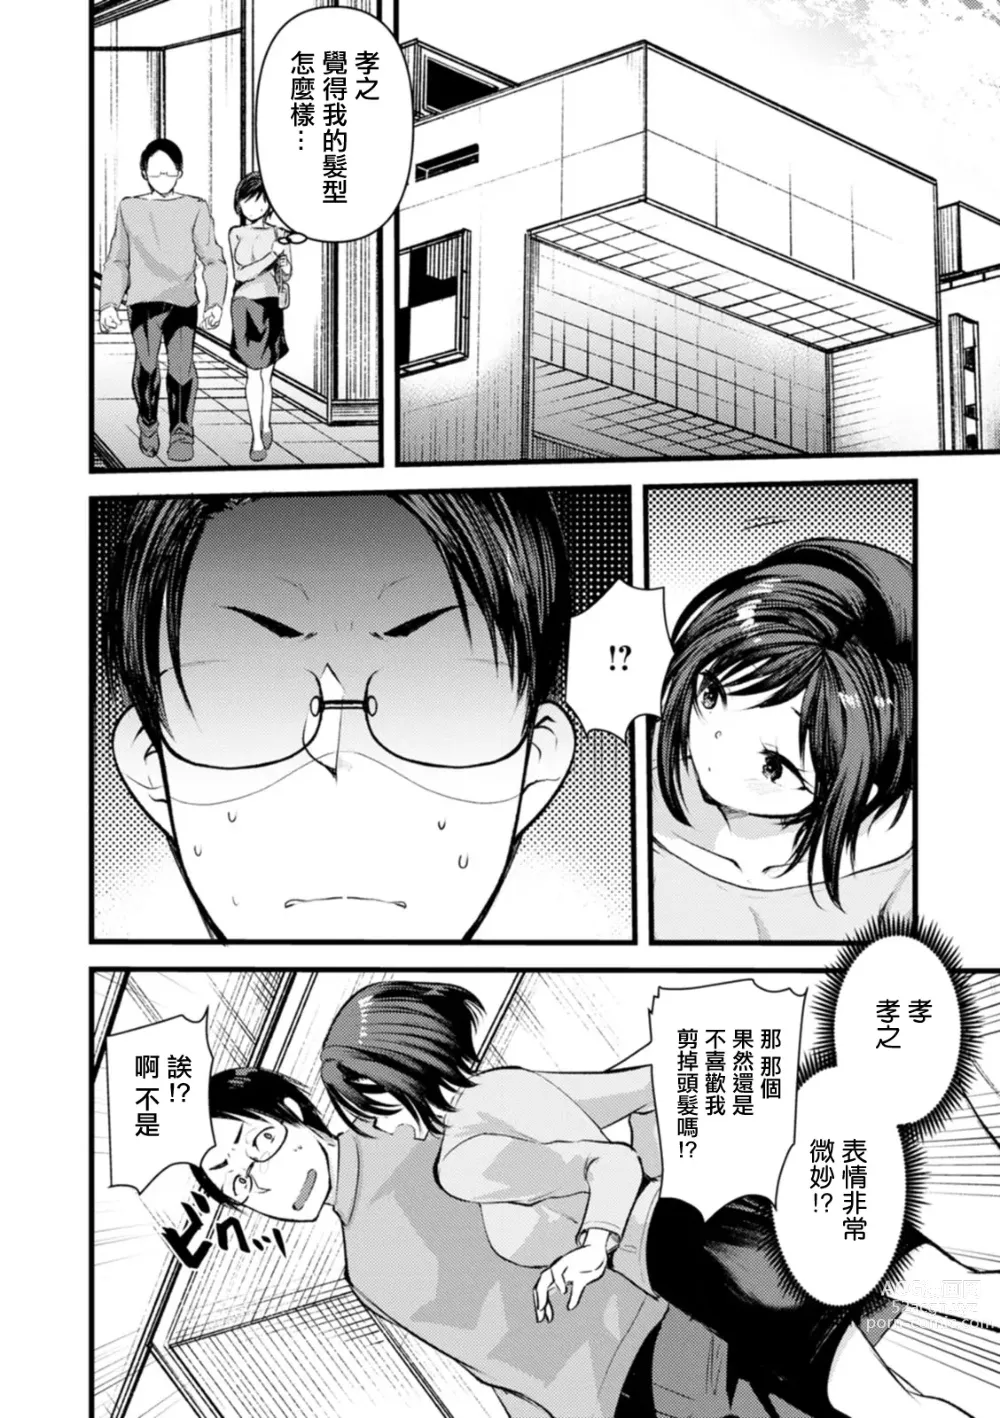 Page 2 of manga Kojirase Ero Nikki Vol.10